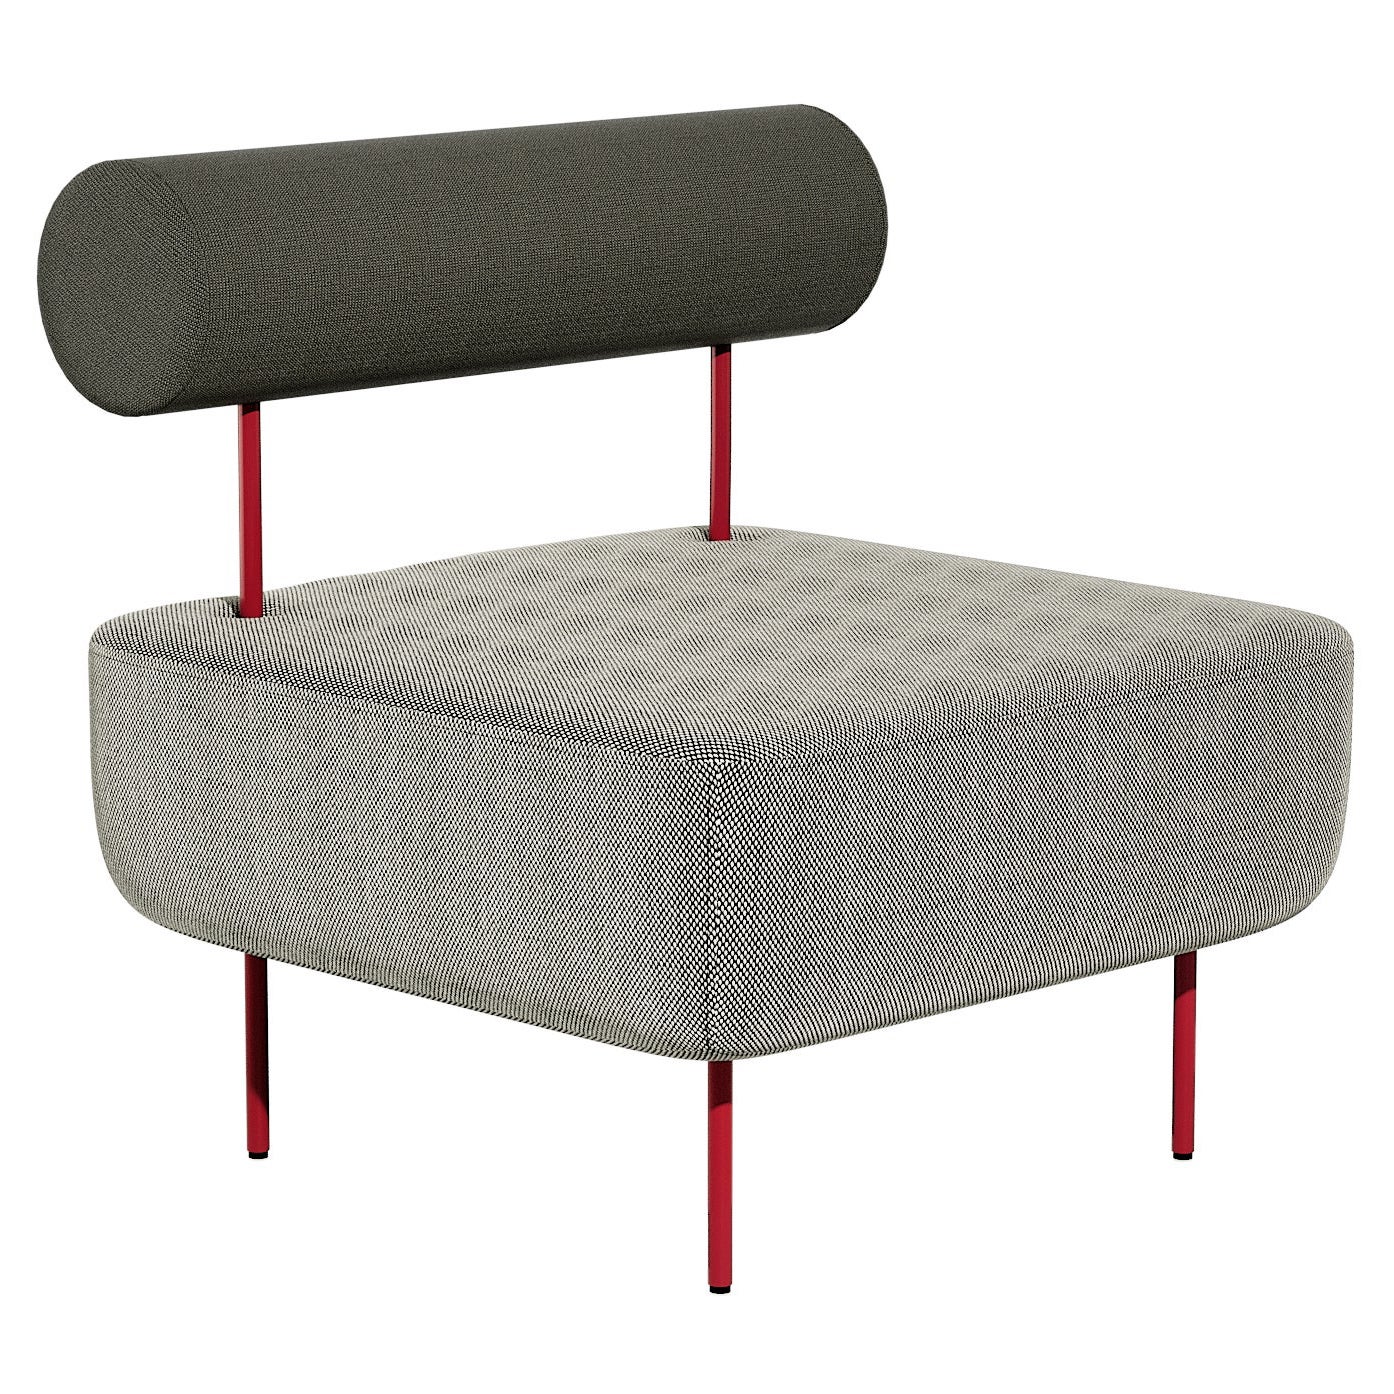 Petite Friture fauteuil Hoff de taille moyenne gris-noir de Morten & Jonas, 2015 en vente